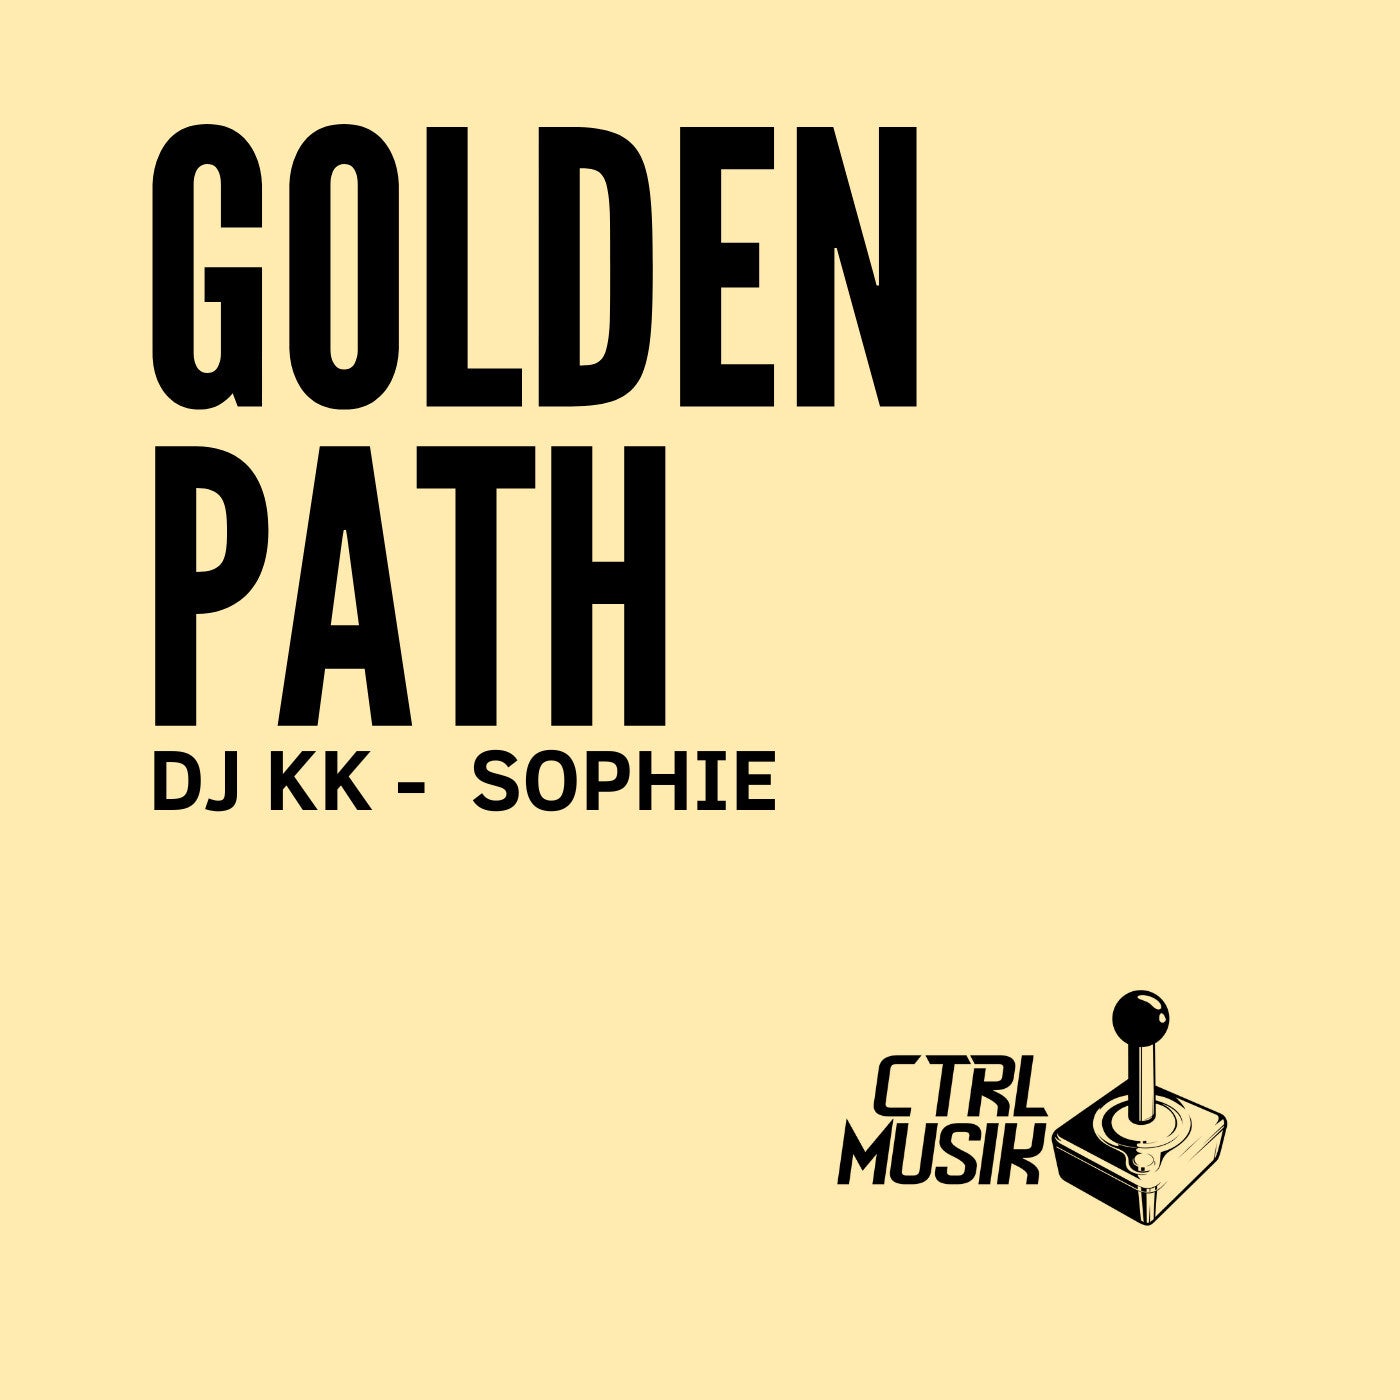 Golden Path